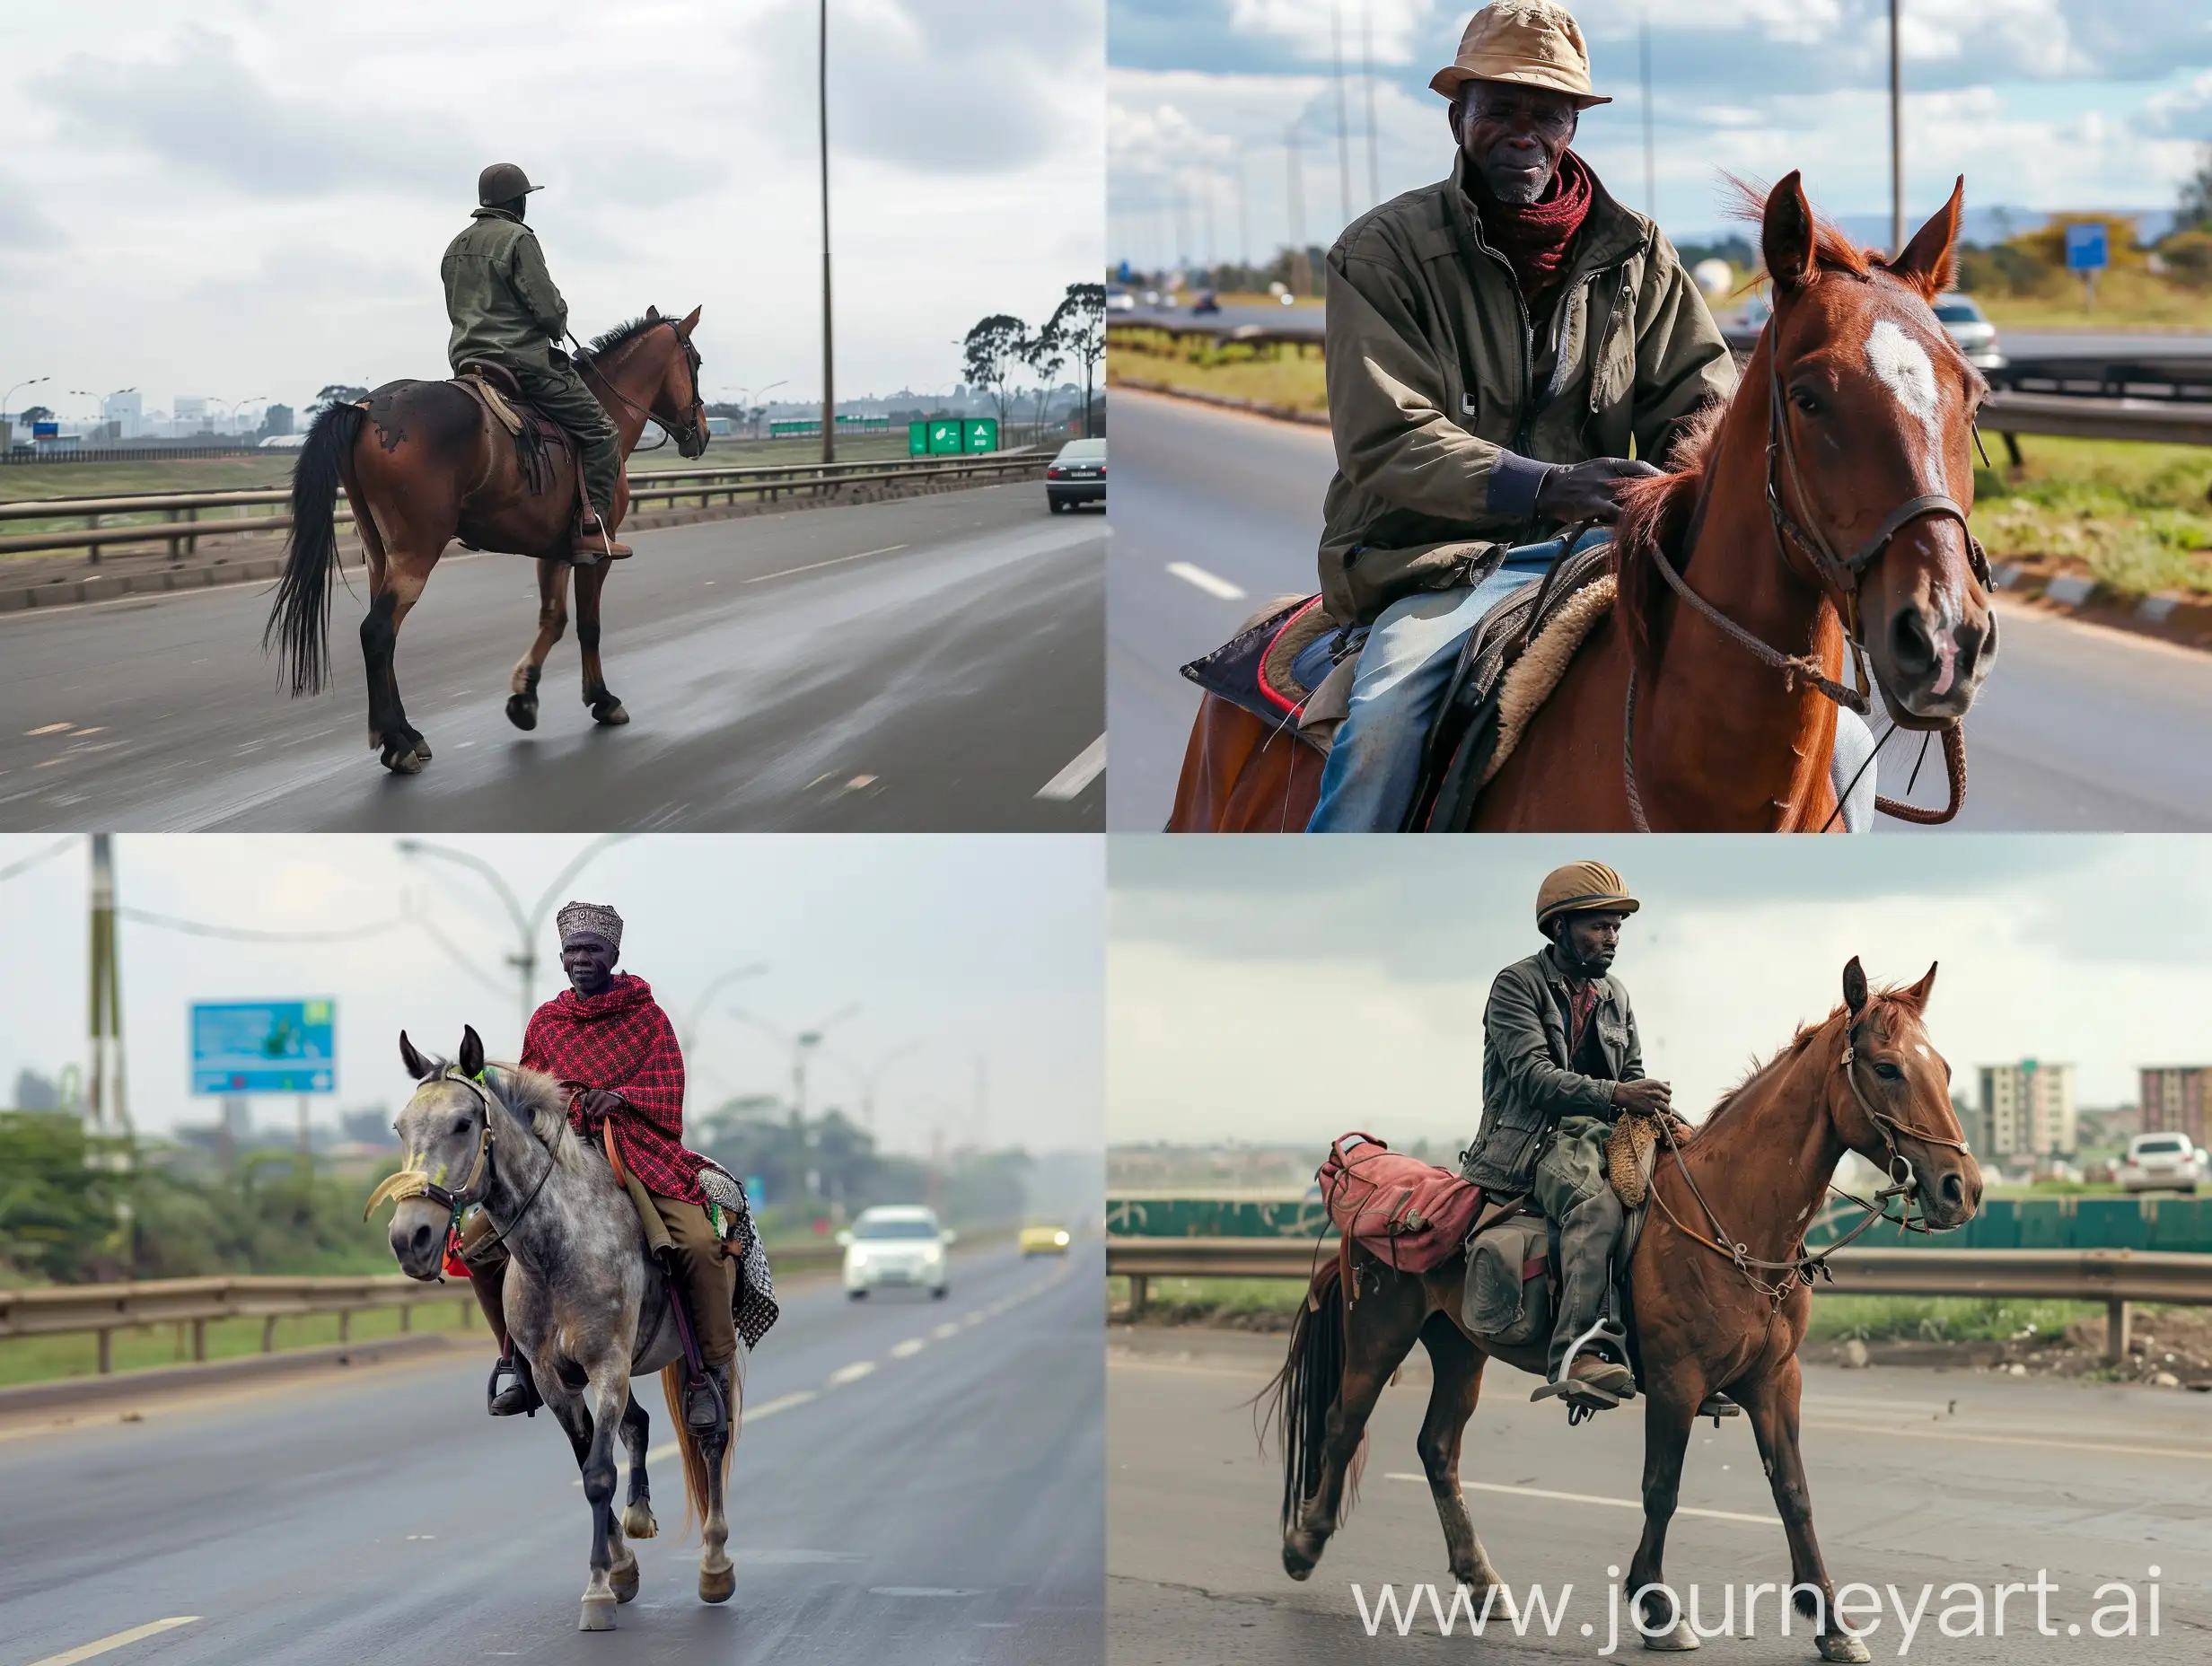 Horseman on the nairobi expressway

